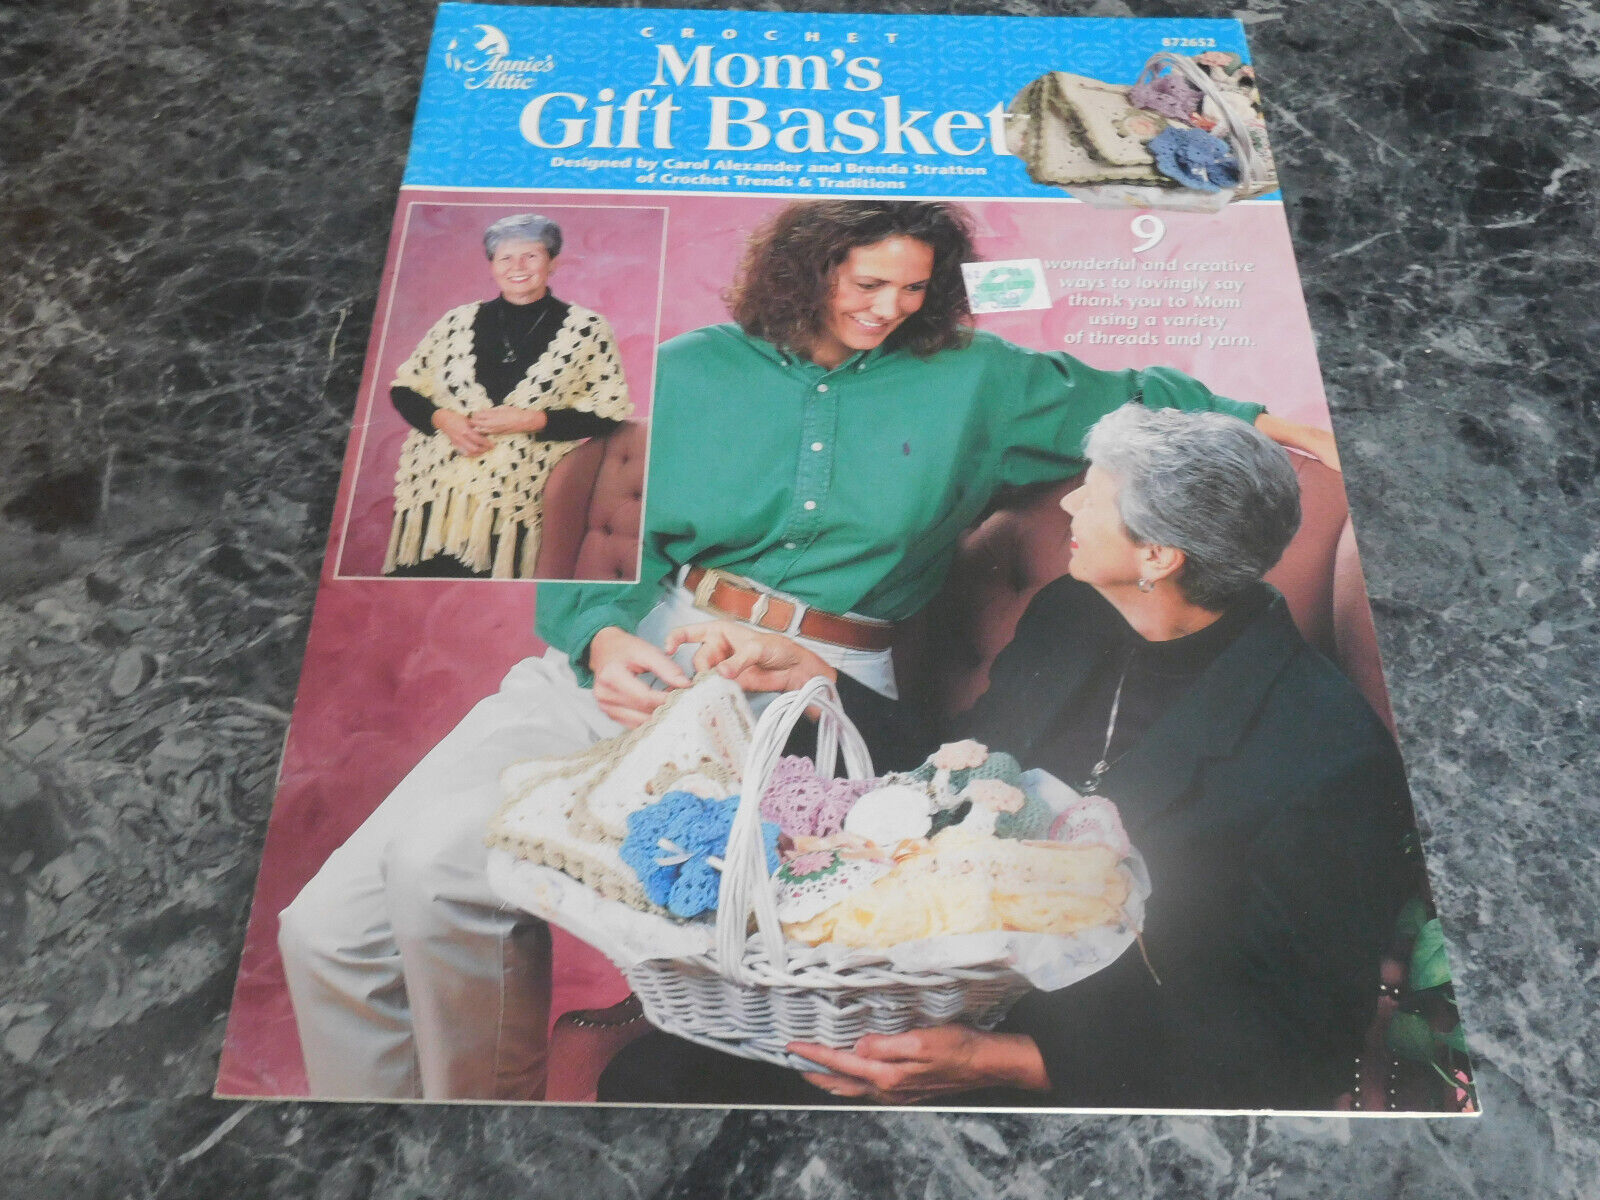 Crochet Mom's Gift Basket by Carol Alexander - $4.99